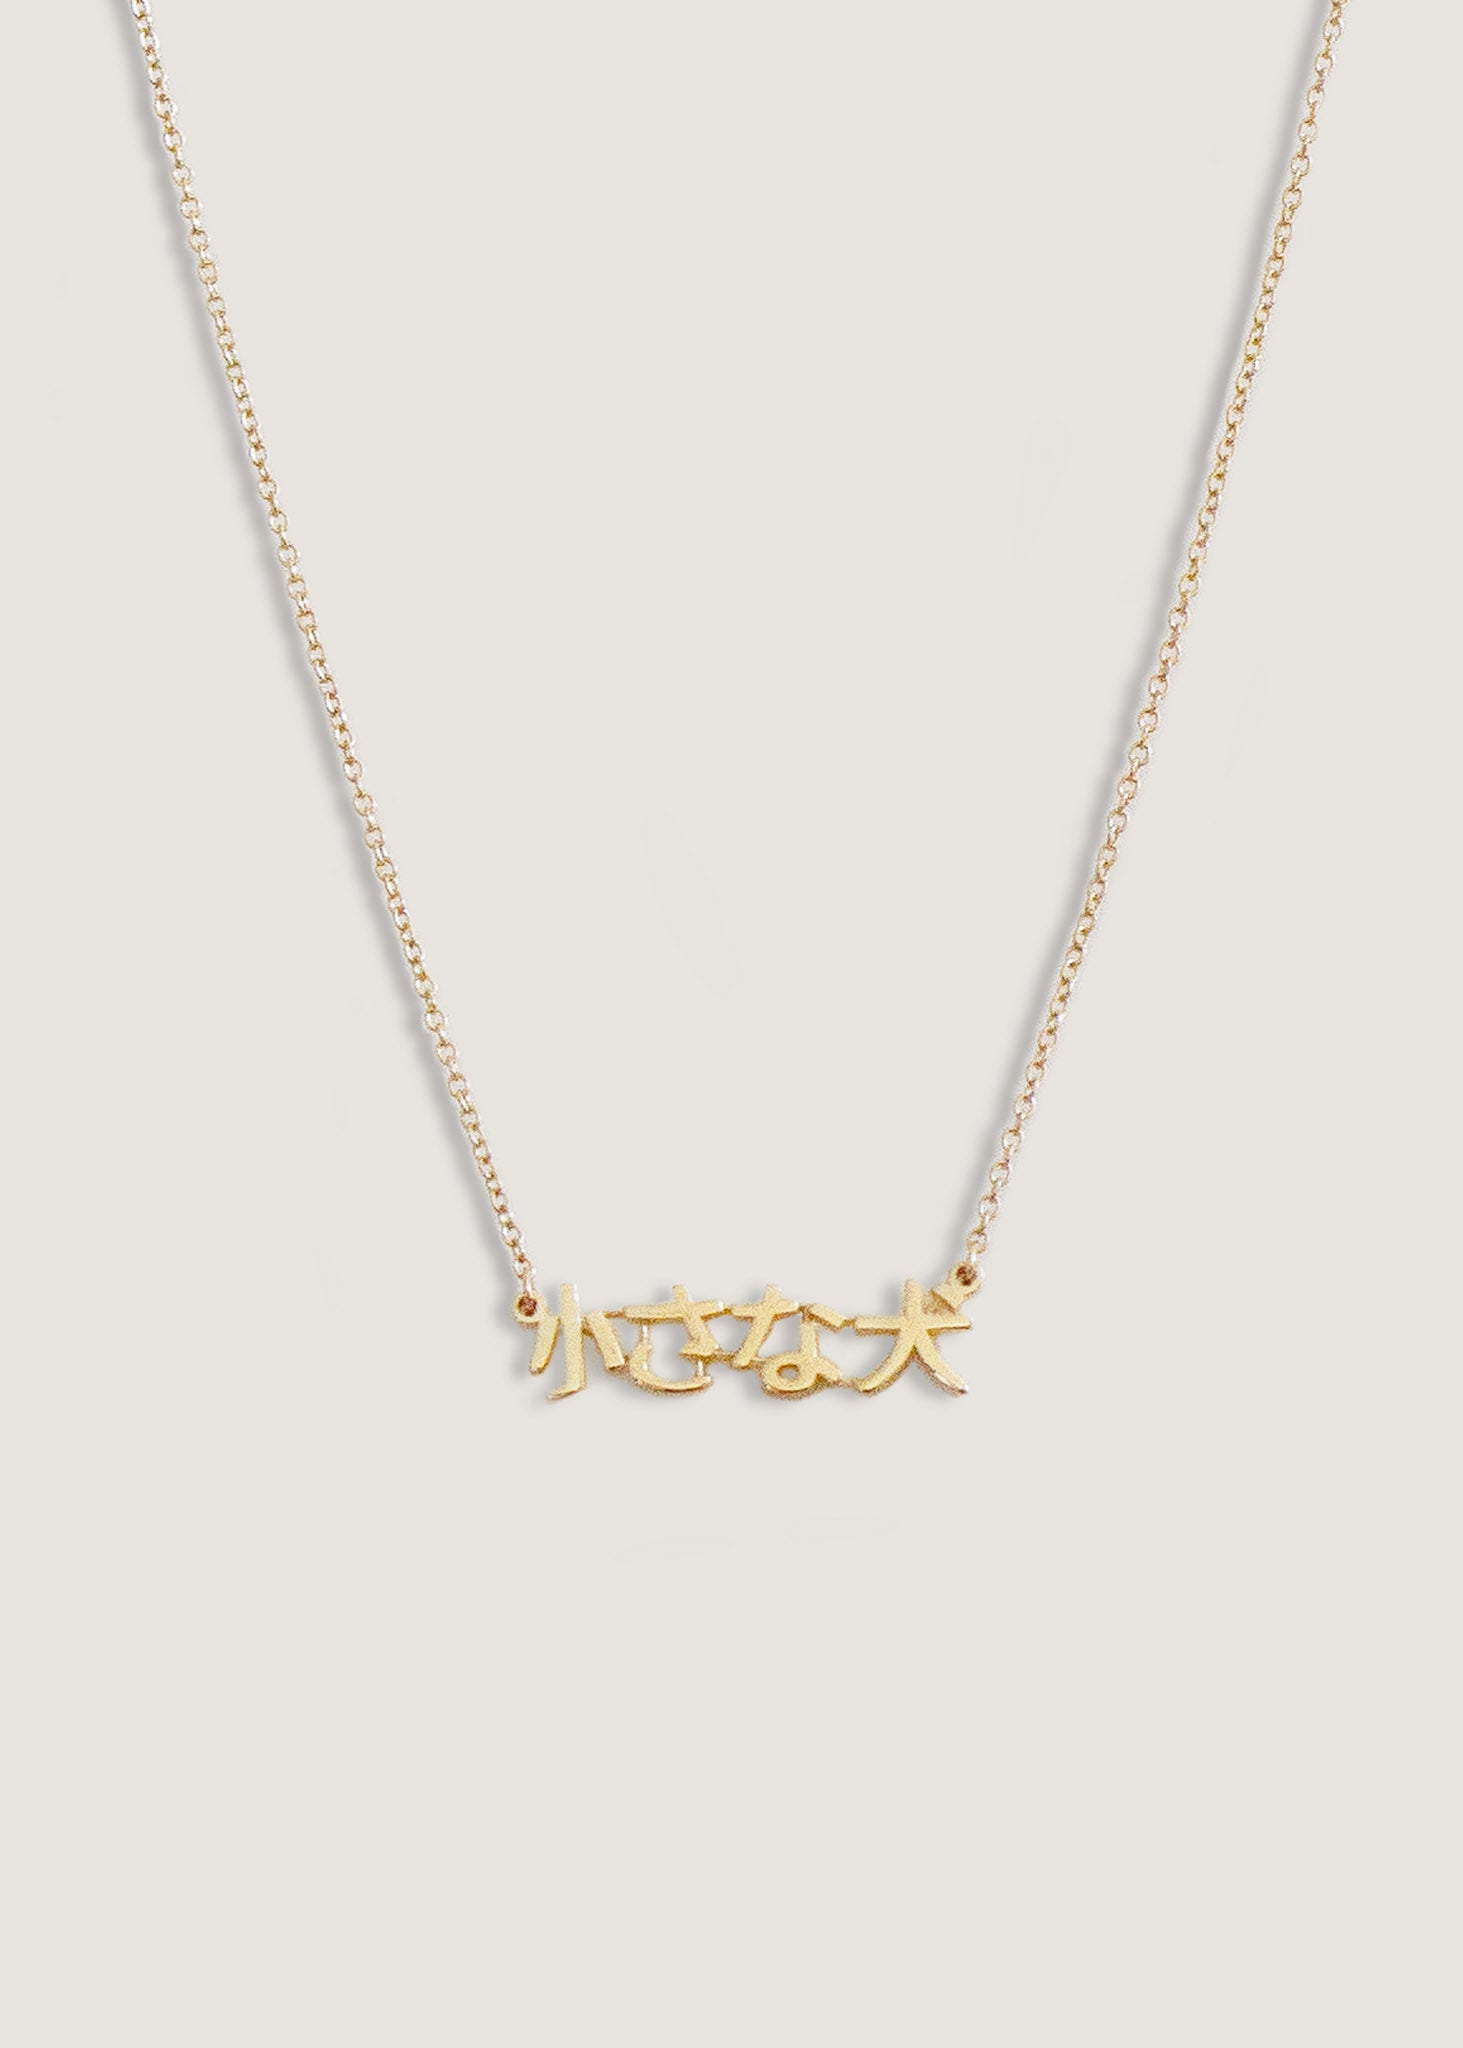 Dear Kaia III Asian Nameplate Necklace 14k Gold - Kinn